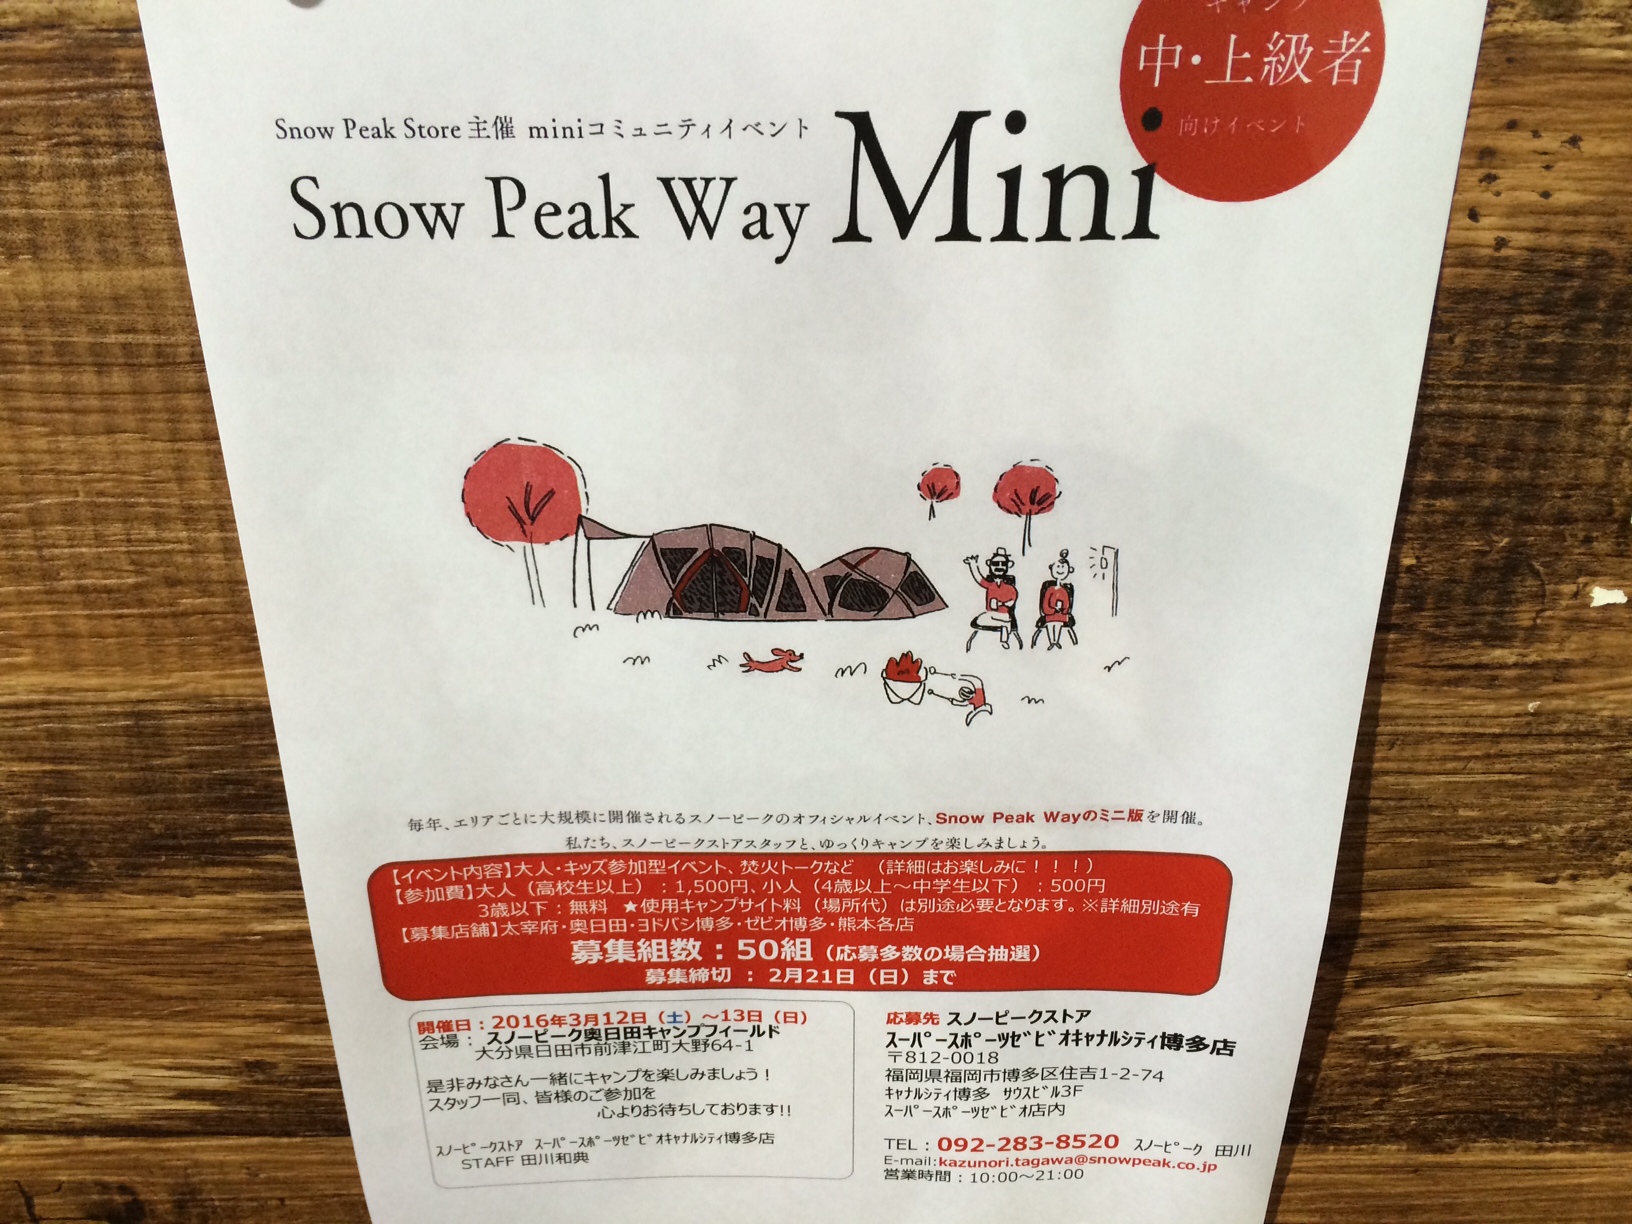 Snow Peak Way Mini 九州